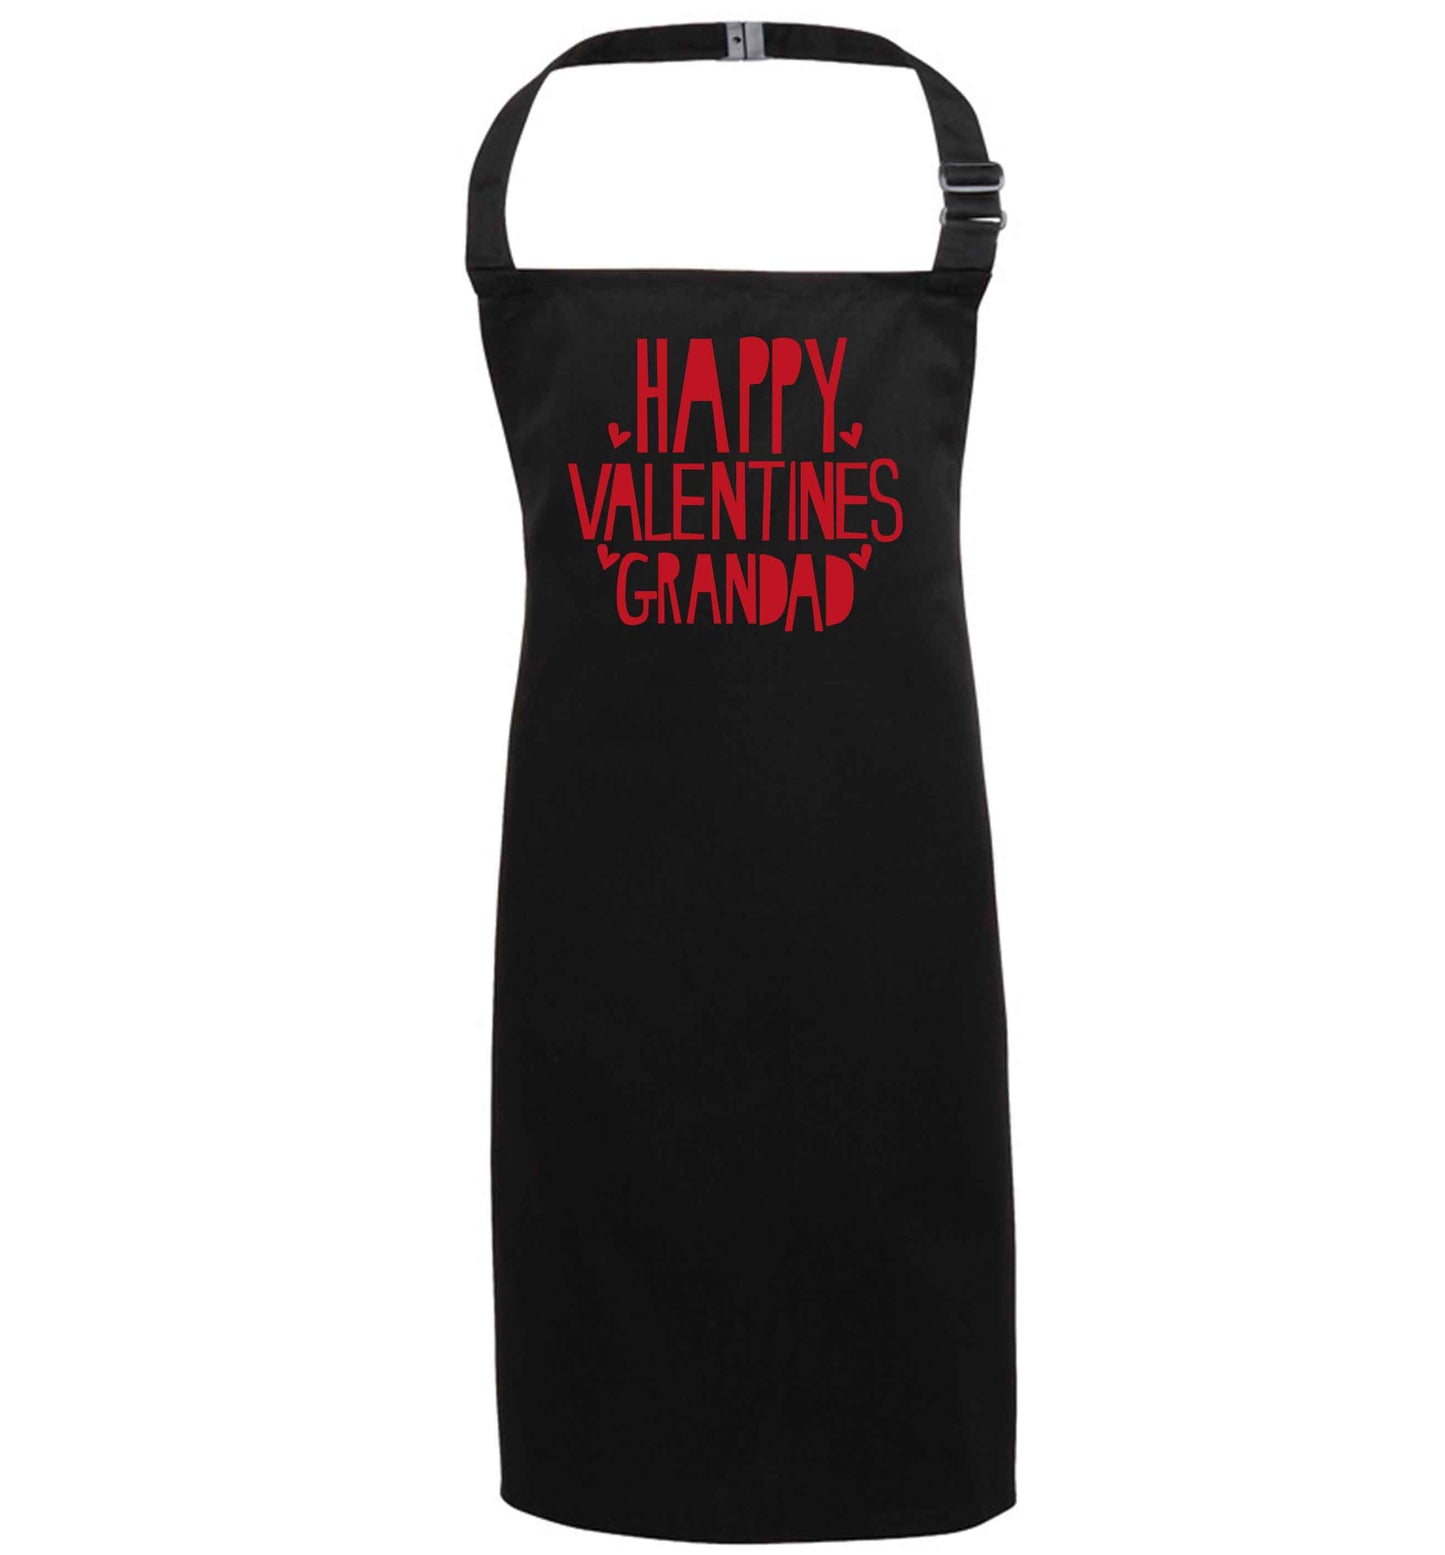 Happy valentines grandad black apron 7-10 years